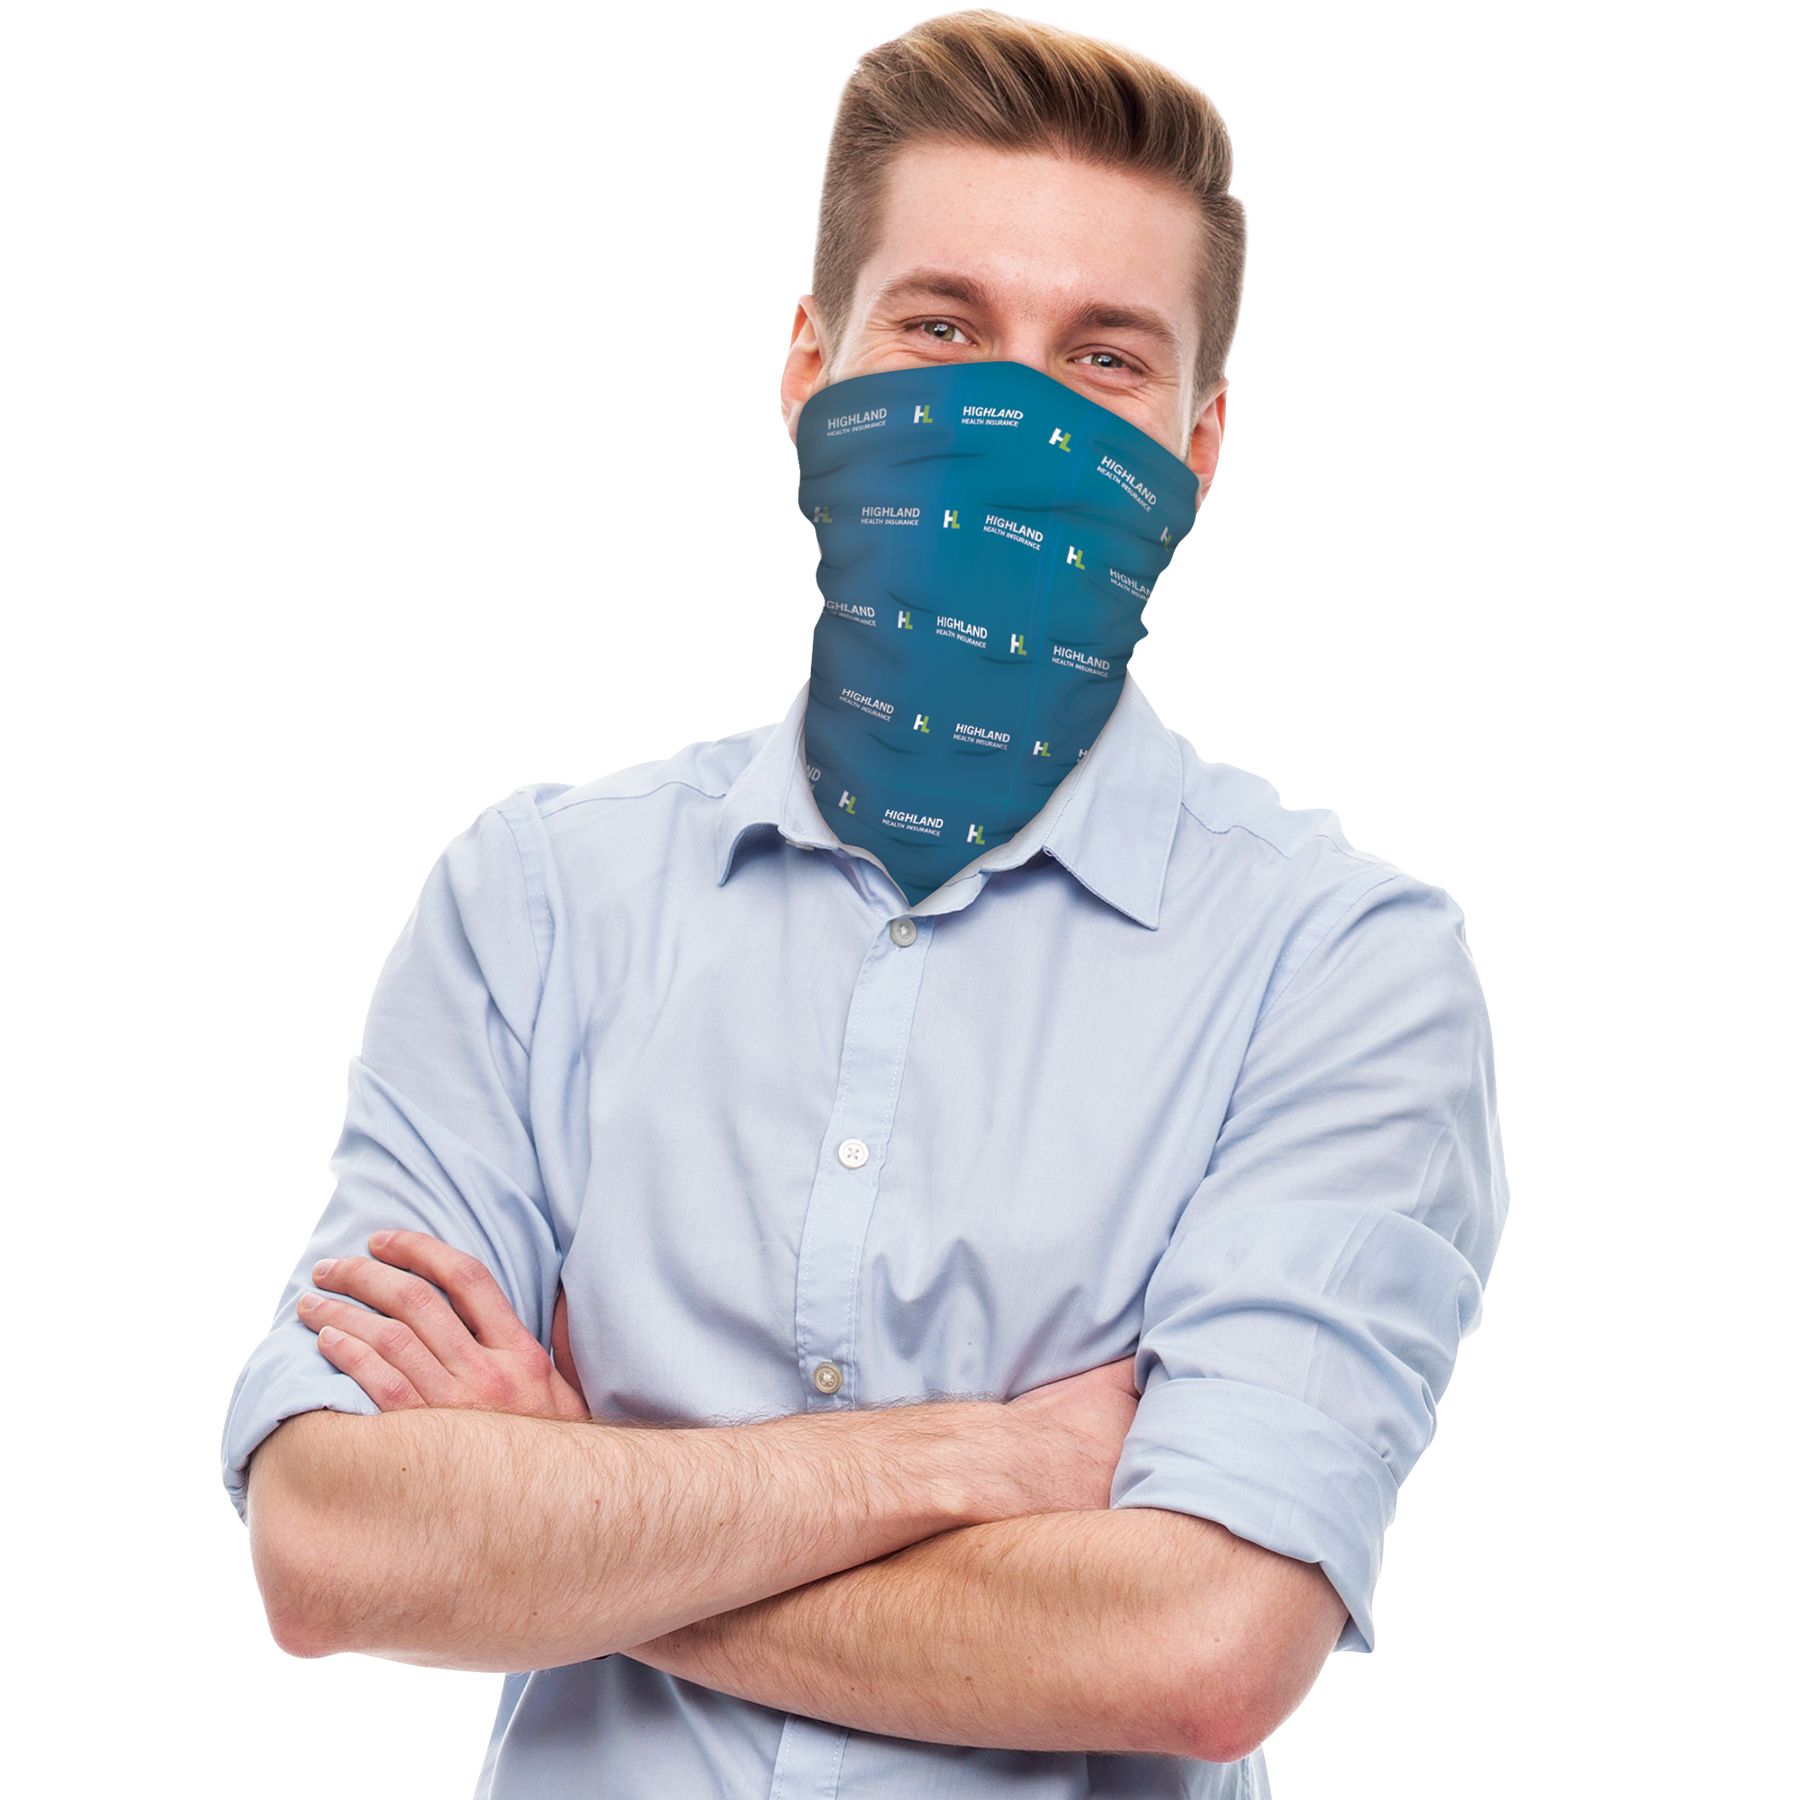 Flu Virus Face Masks, Custom Imprinted With Your Logo!